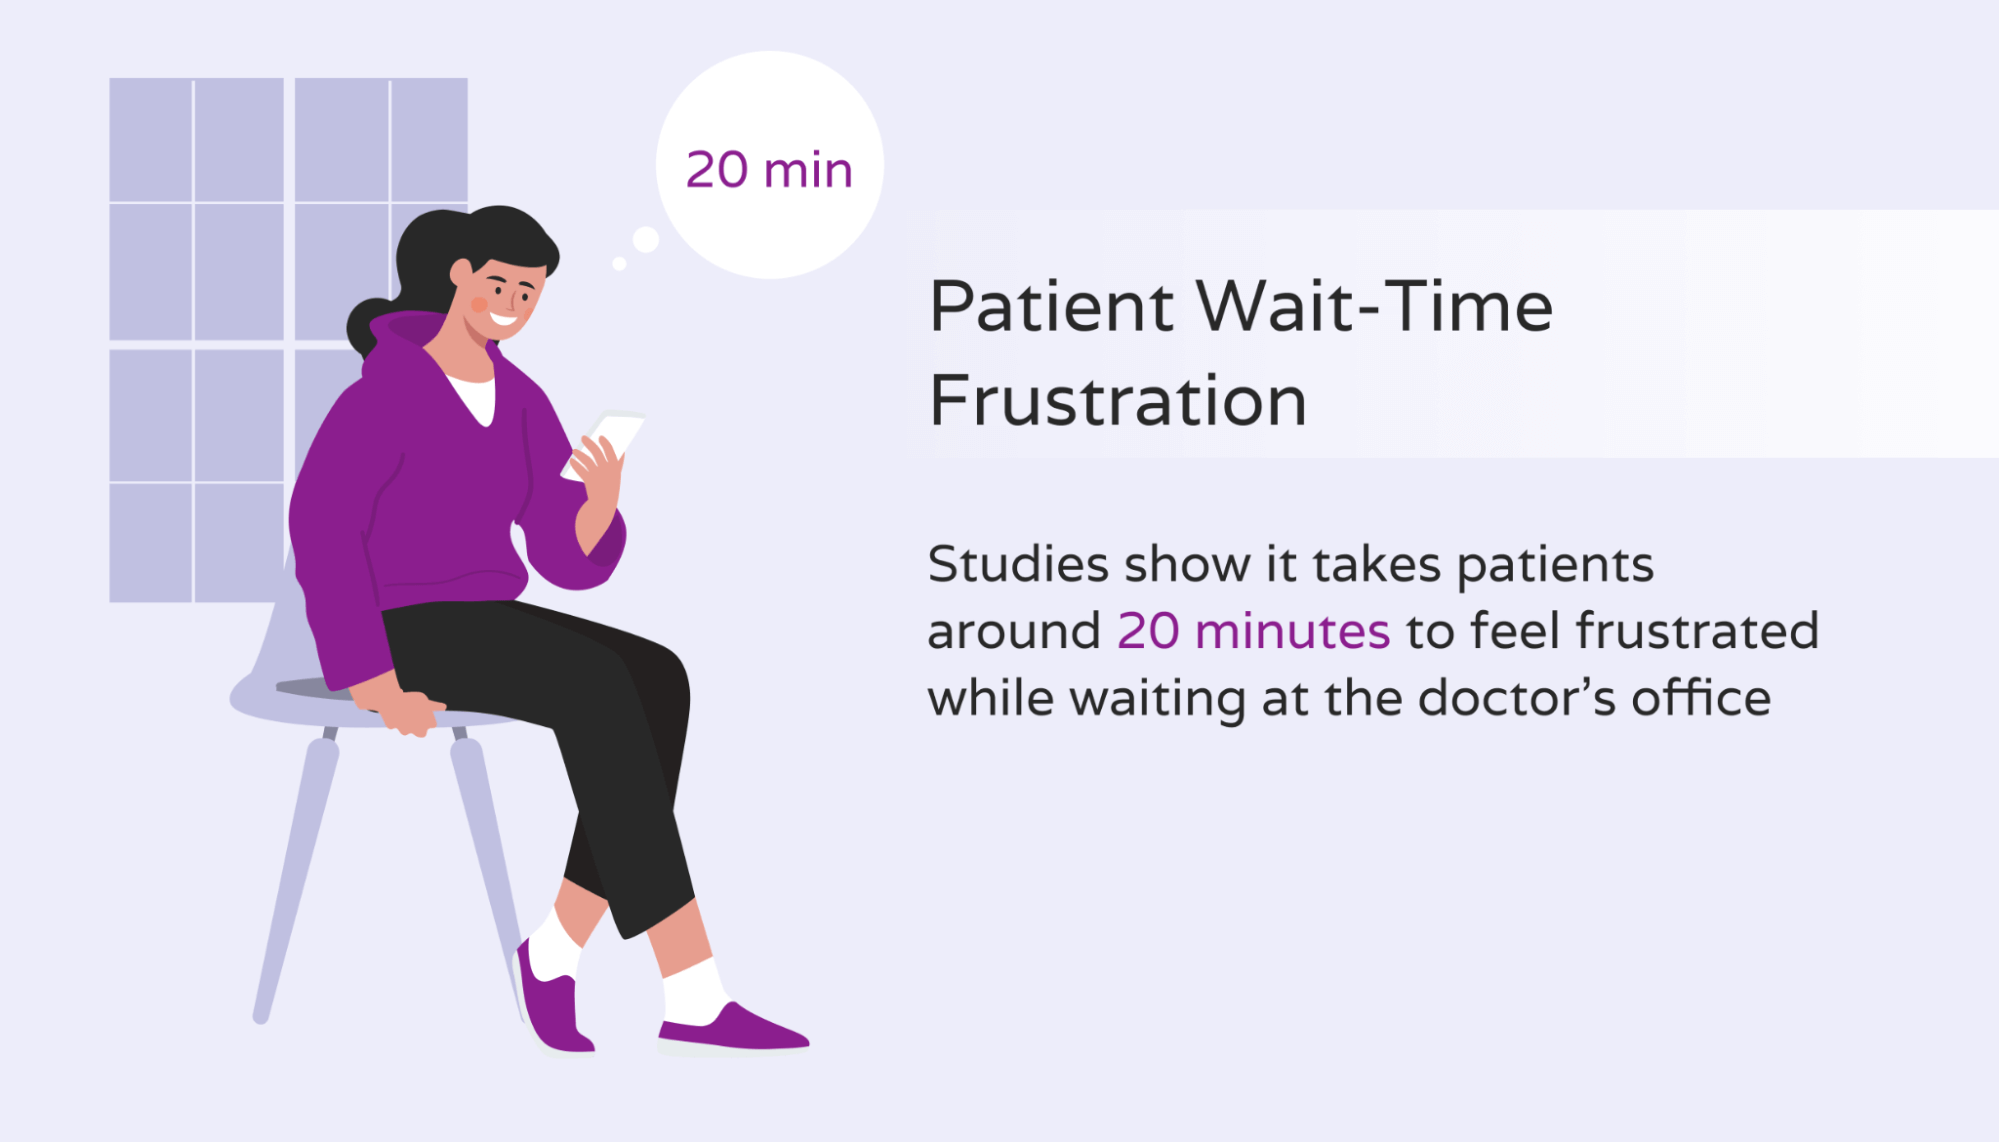 Statistics on patient wait time frustration